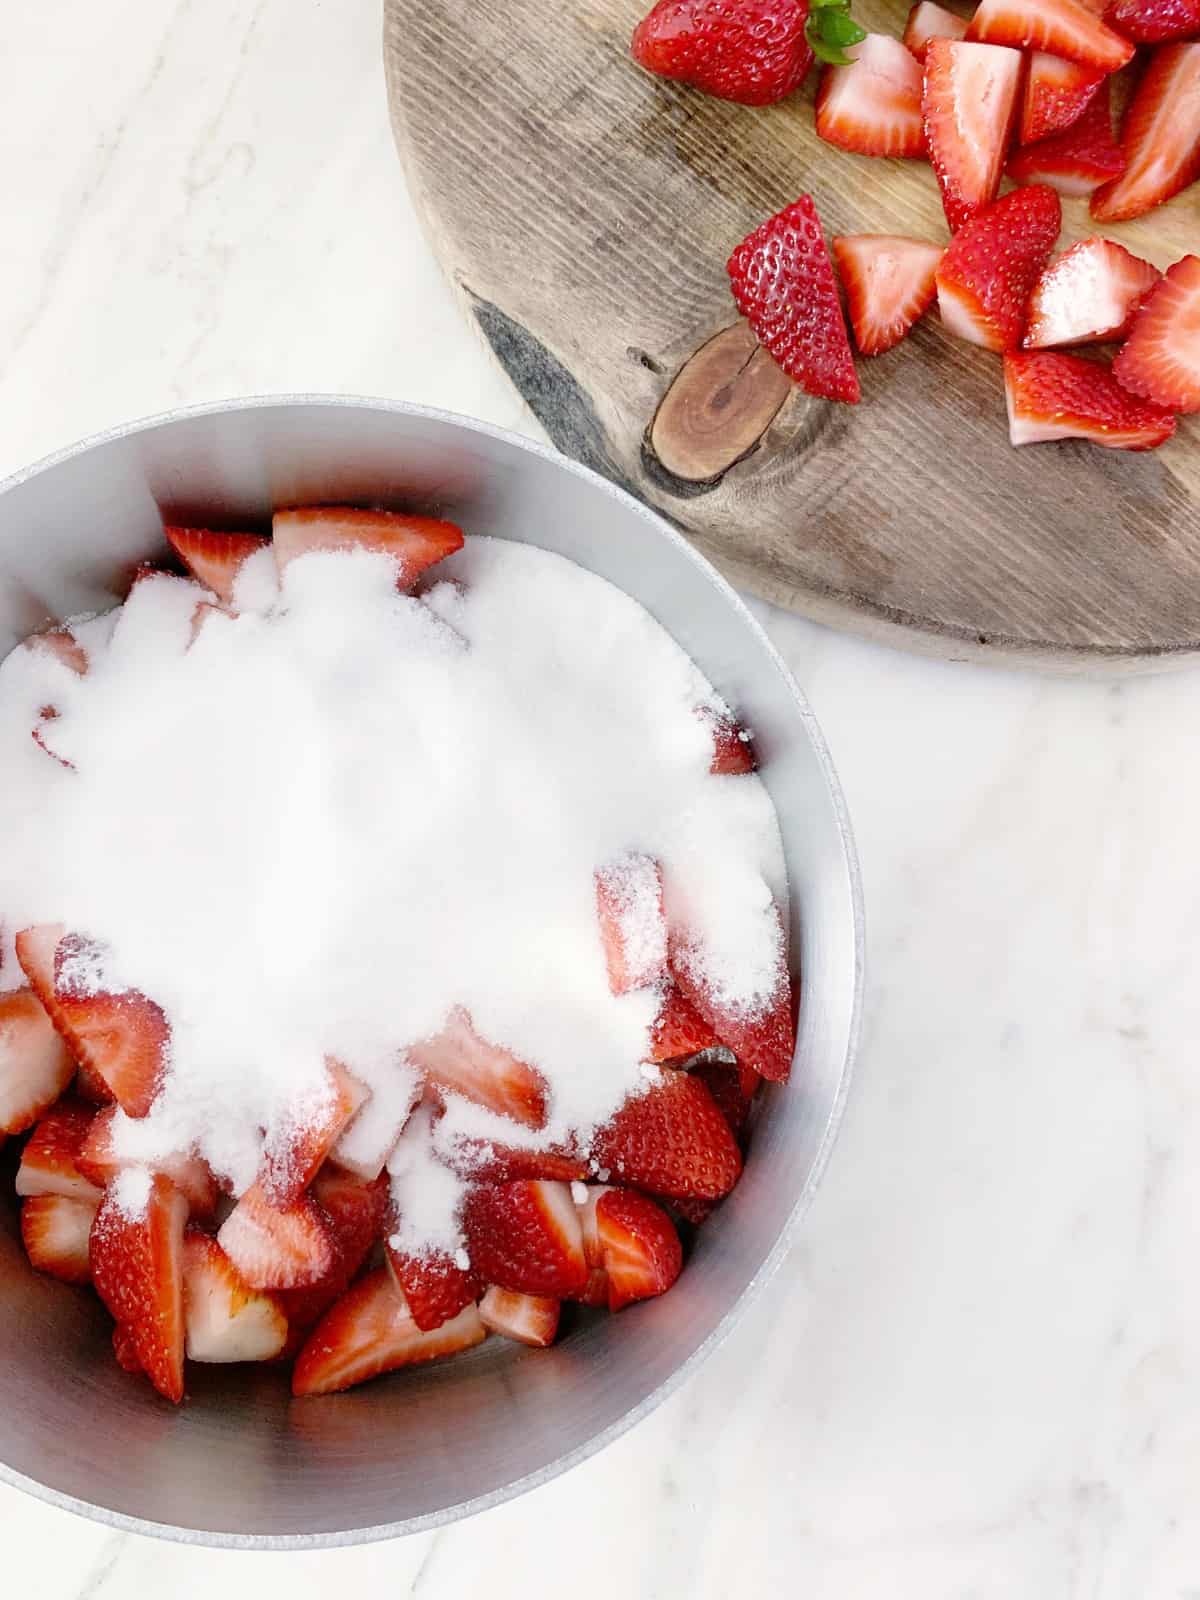 In a medium saucepan, combine strawberries, sugar, and water.